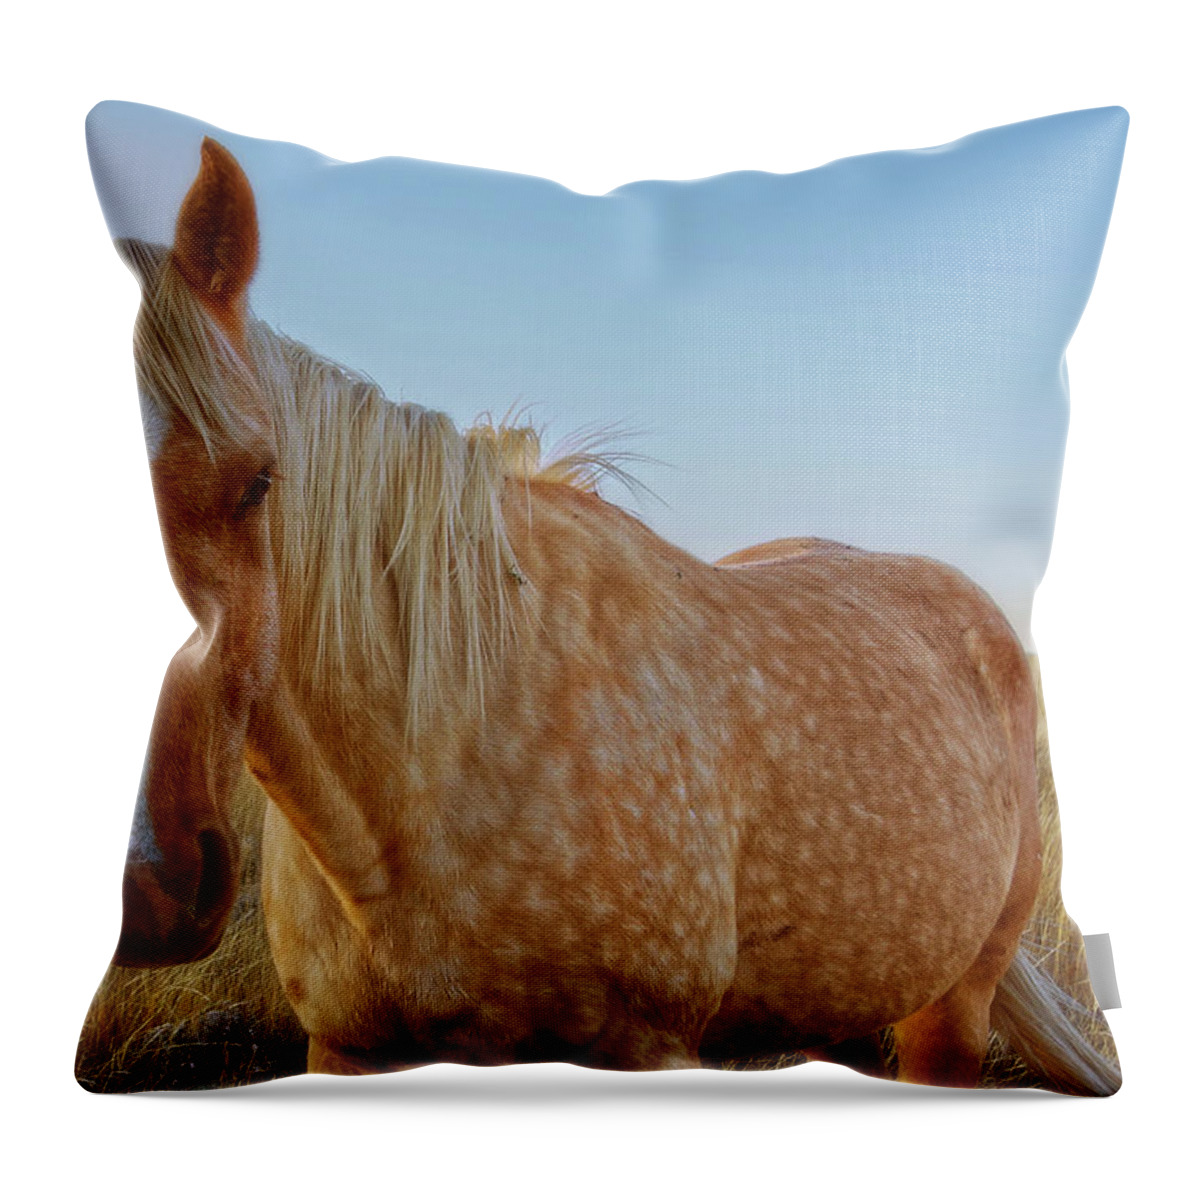 Horse Throw Pillow featuring the photograph Raising Dapple by Amanda Smith